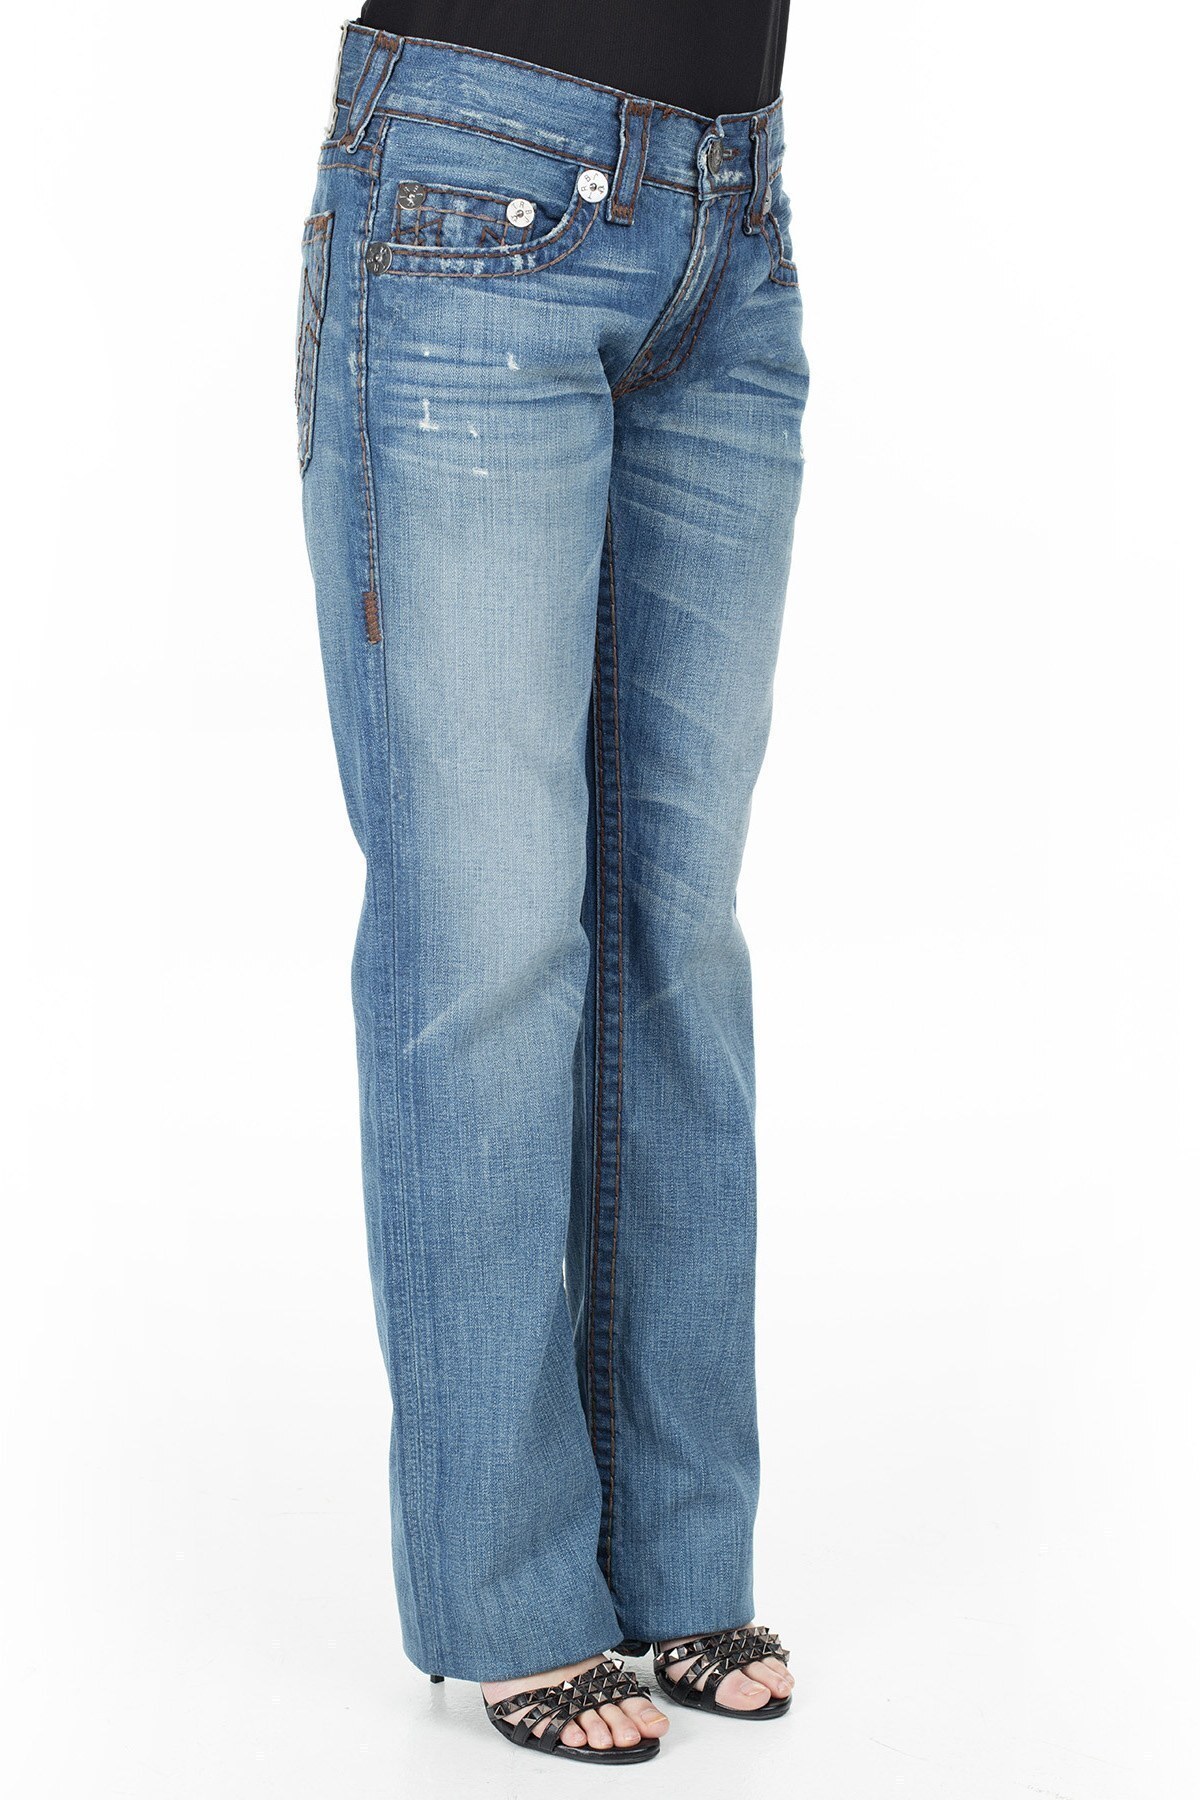 True Religion Jeans Erkek Kot Pantolon M24800M38 LACİVERT